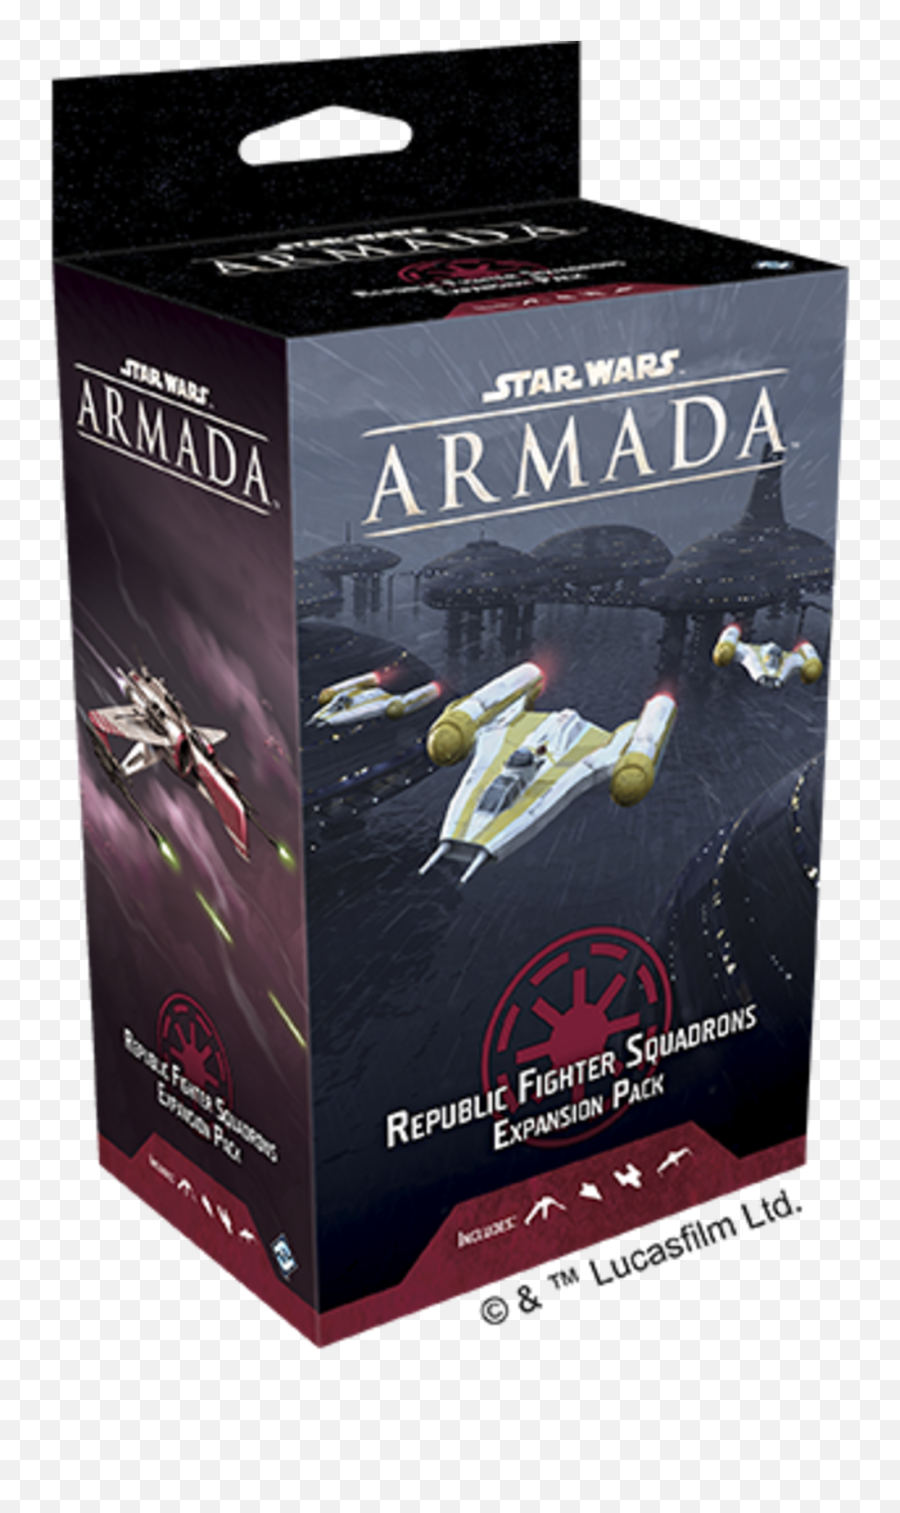 Armada - Star Wars Armada Republic Fighter Squadrons Expansion Pack Emoji,Galactic Republic Logo